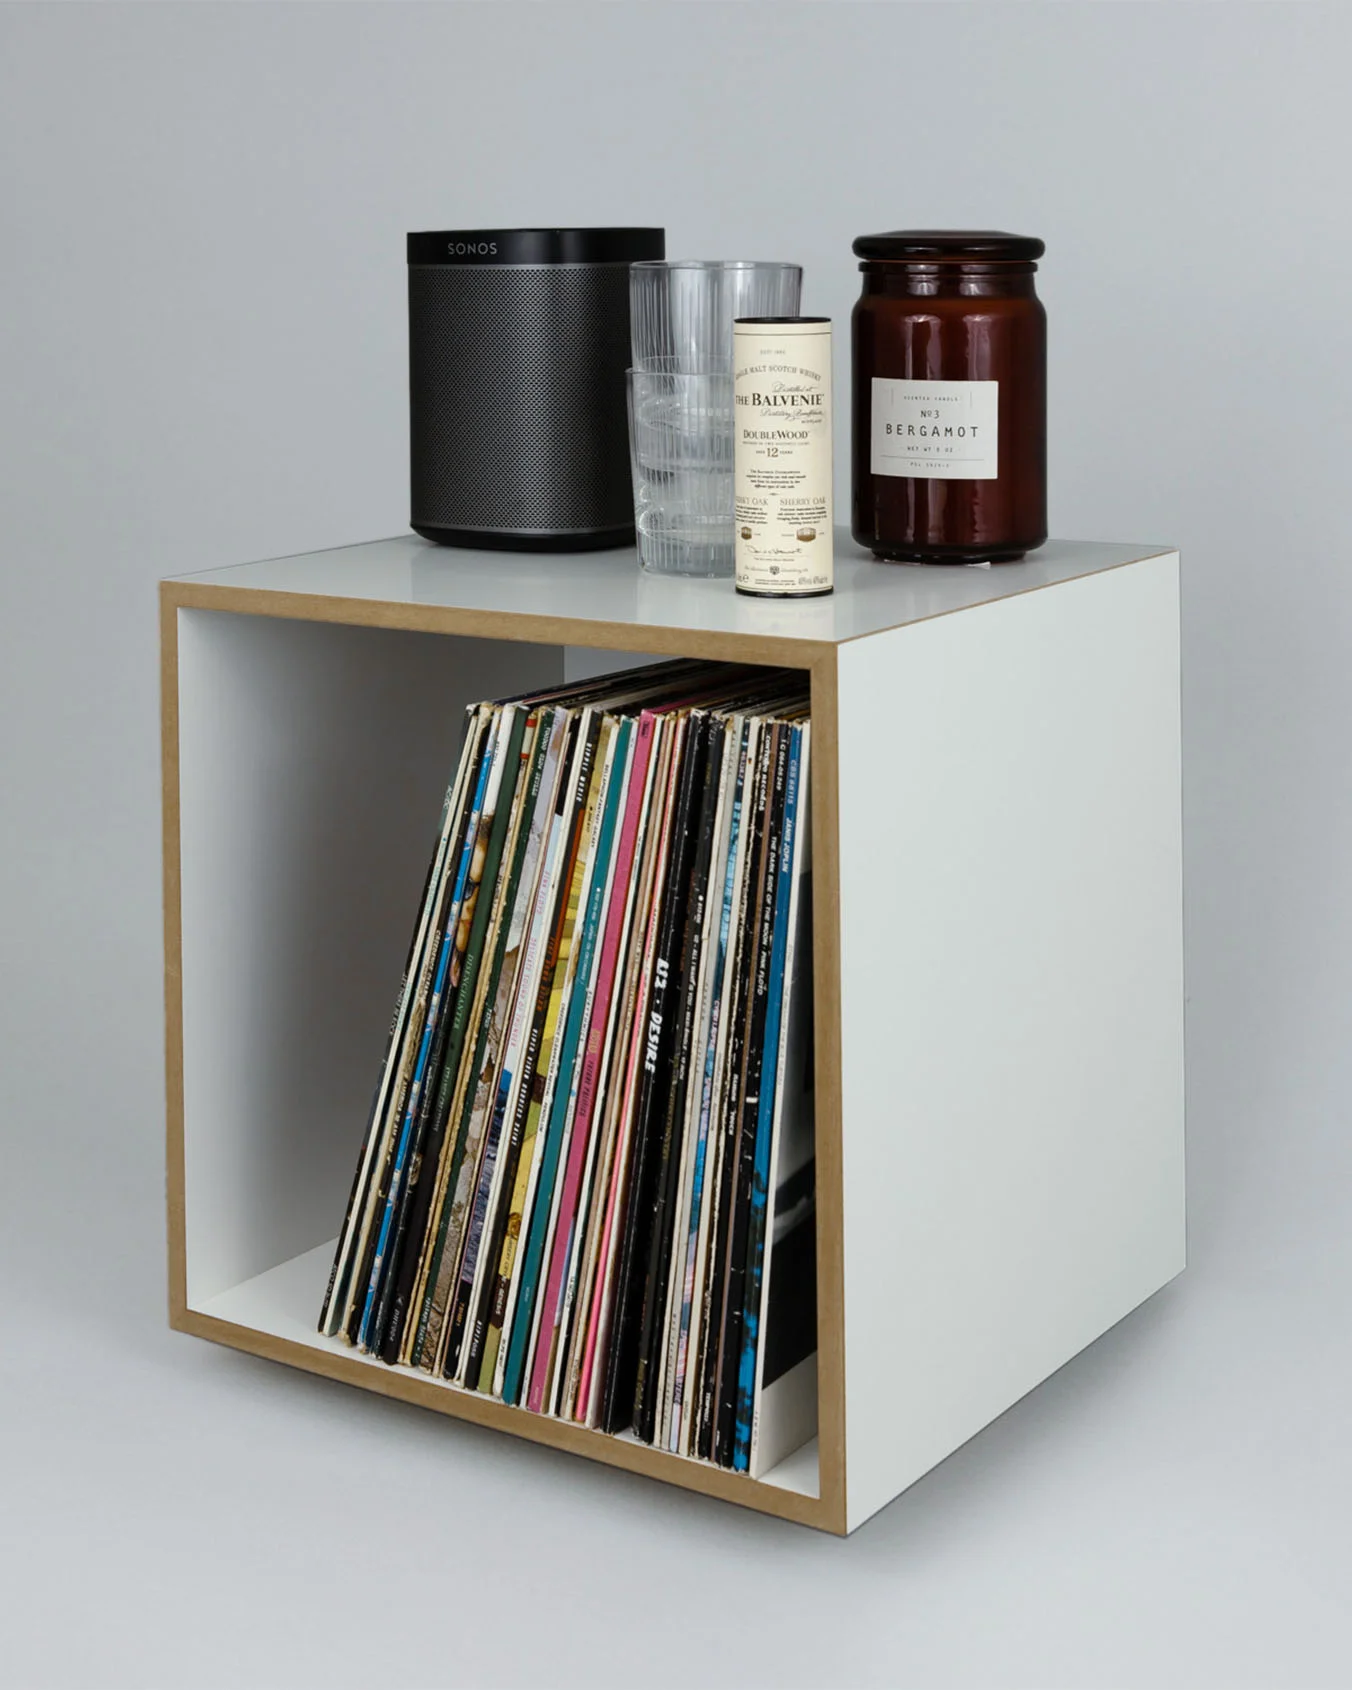 Blog, Vinyl & HiFi, 1:1 Cube